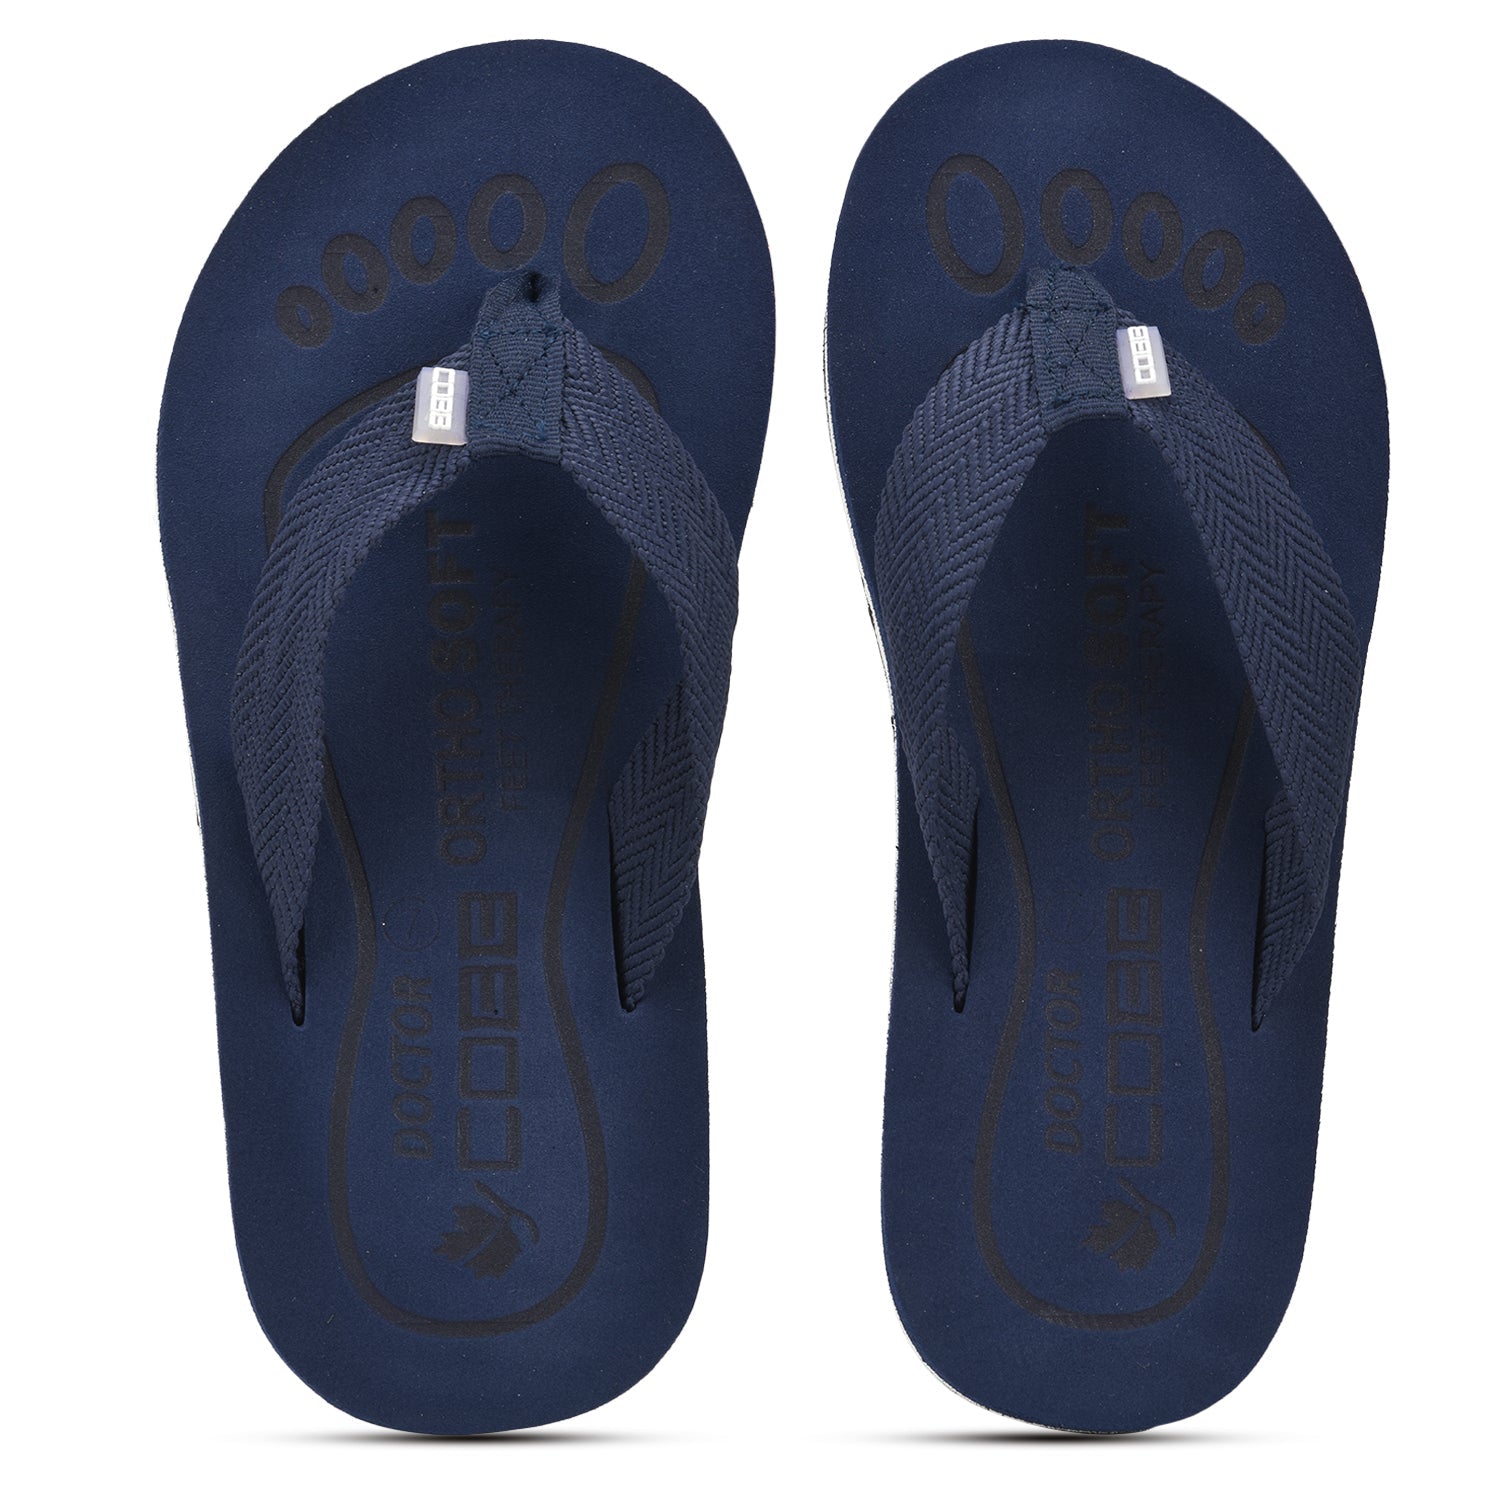 Cobb Mens Navy Soft Feet Slippers NAVY BLUE